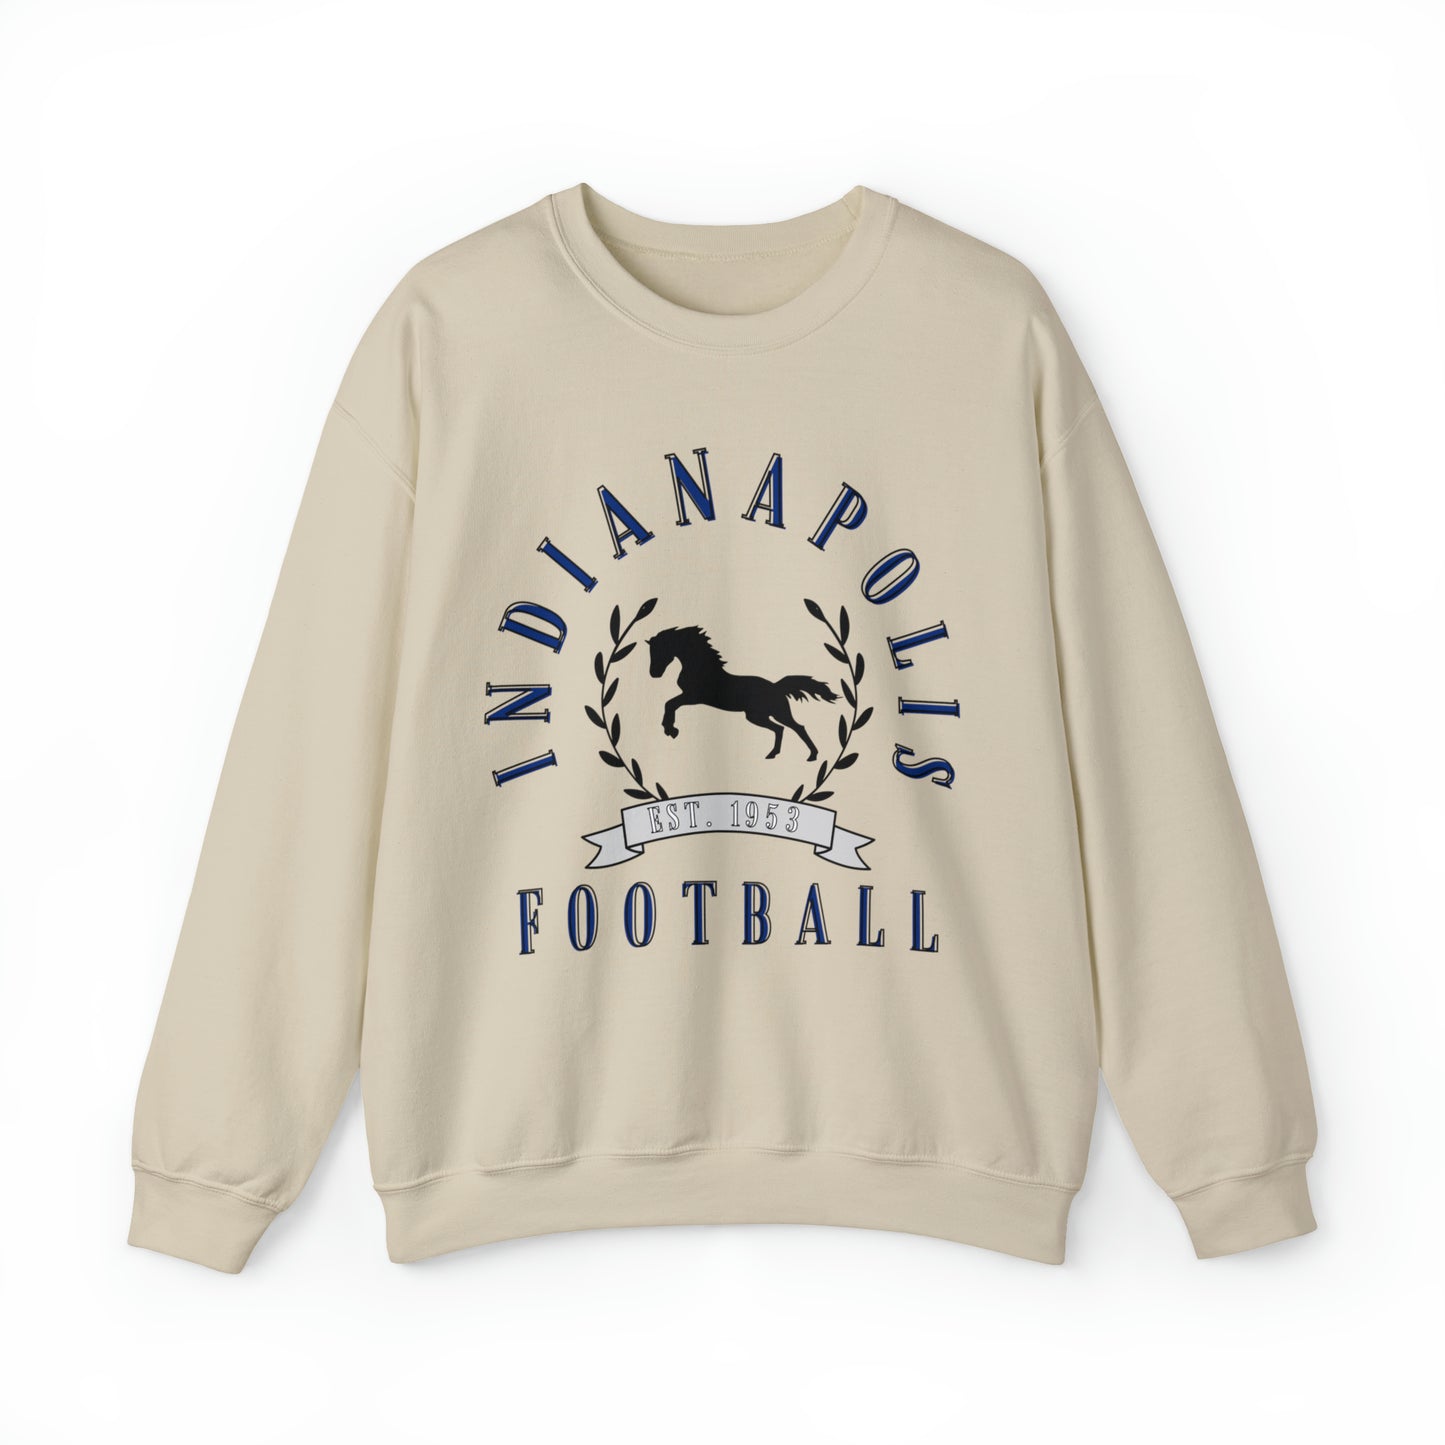 Vintage Indianapolis Colts Crewneck Sweatshirt - Retro Style Football Apparel - Men's & Women's Unisex Sizing